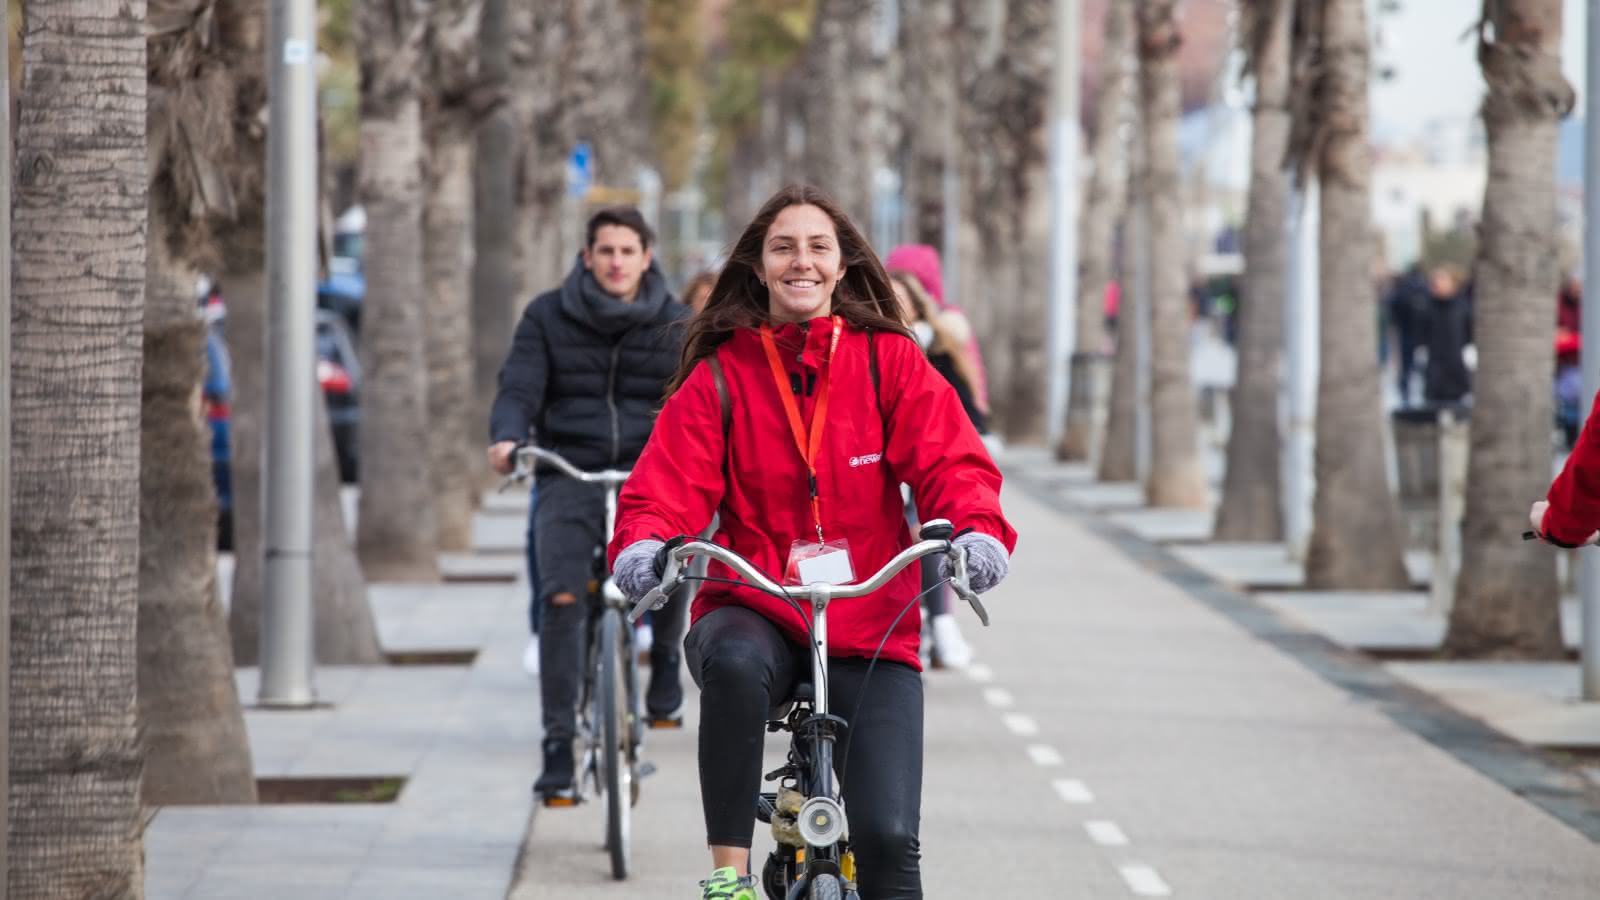 Exploring La Barceloneta by bike with SANDEMANs